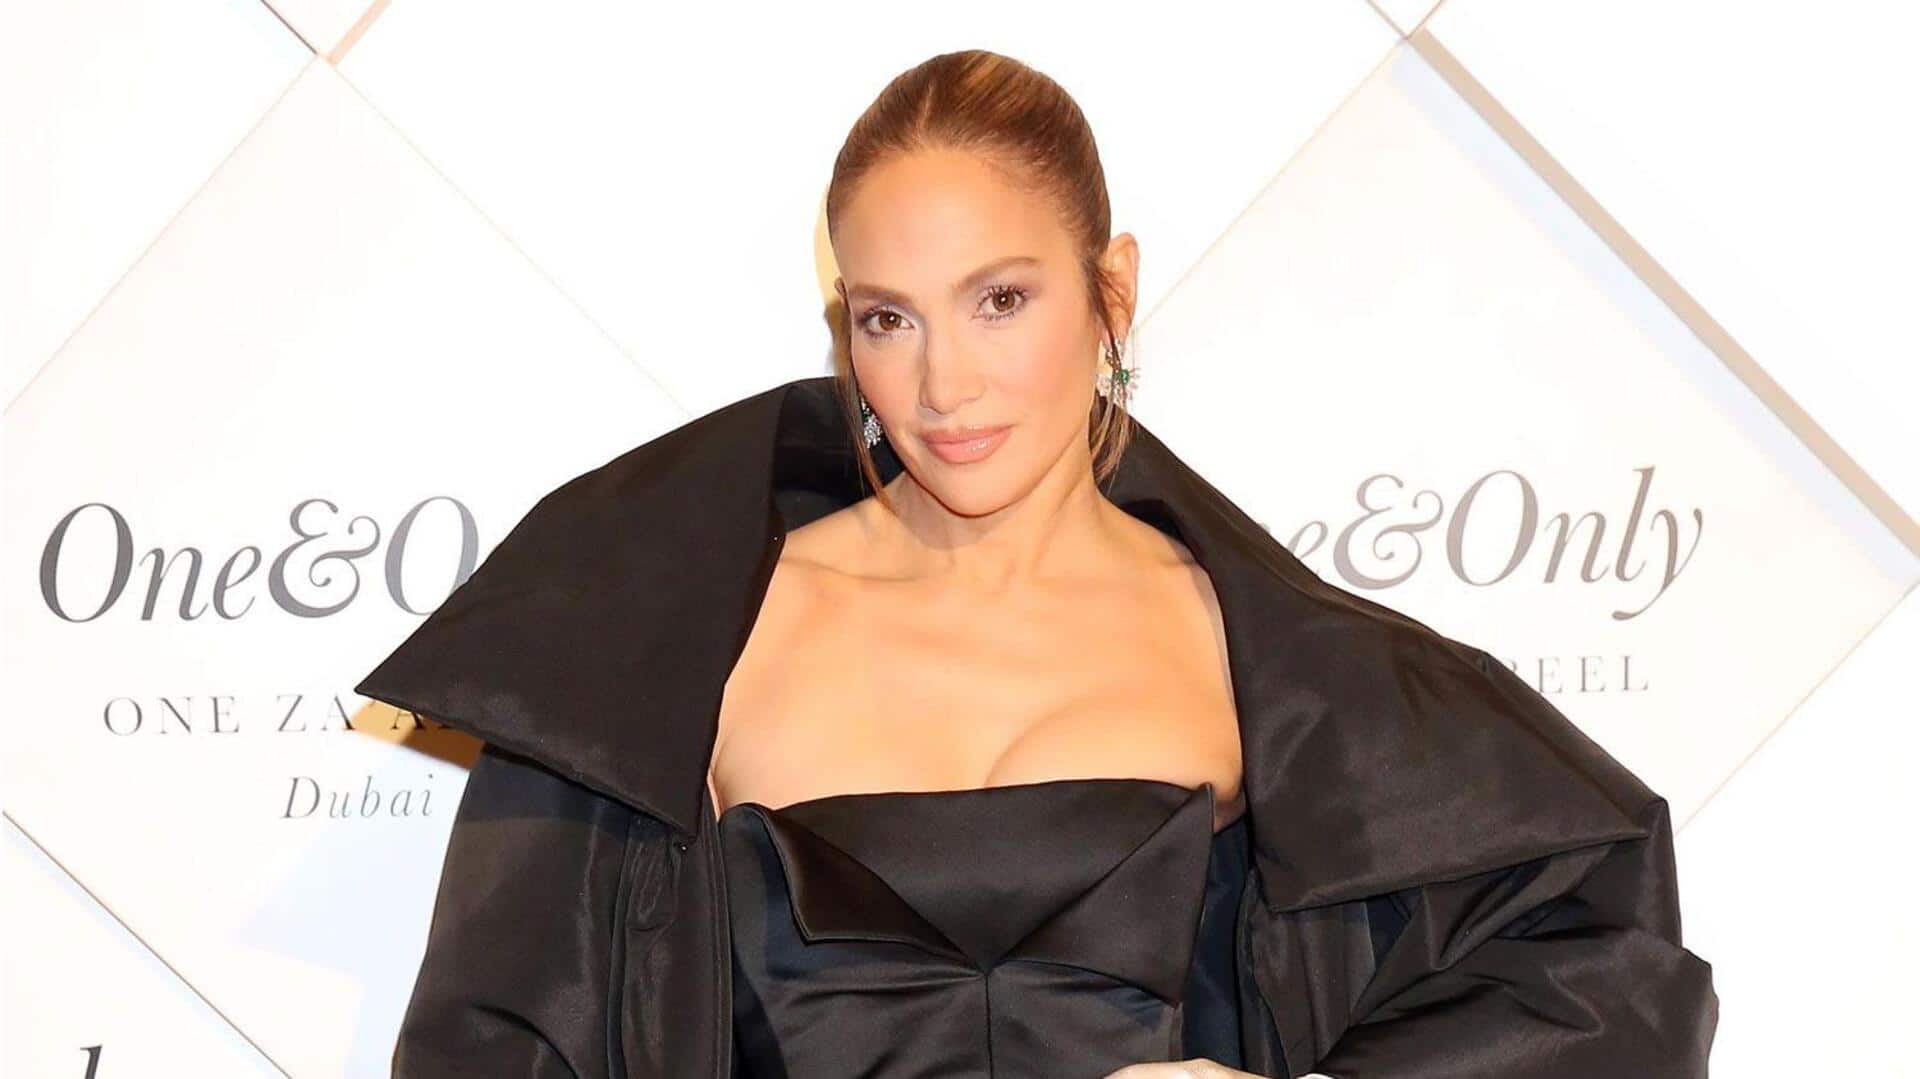 Italian store names dress in honor of Jennifer Lopez